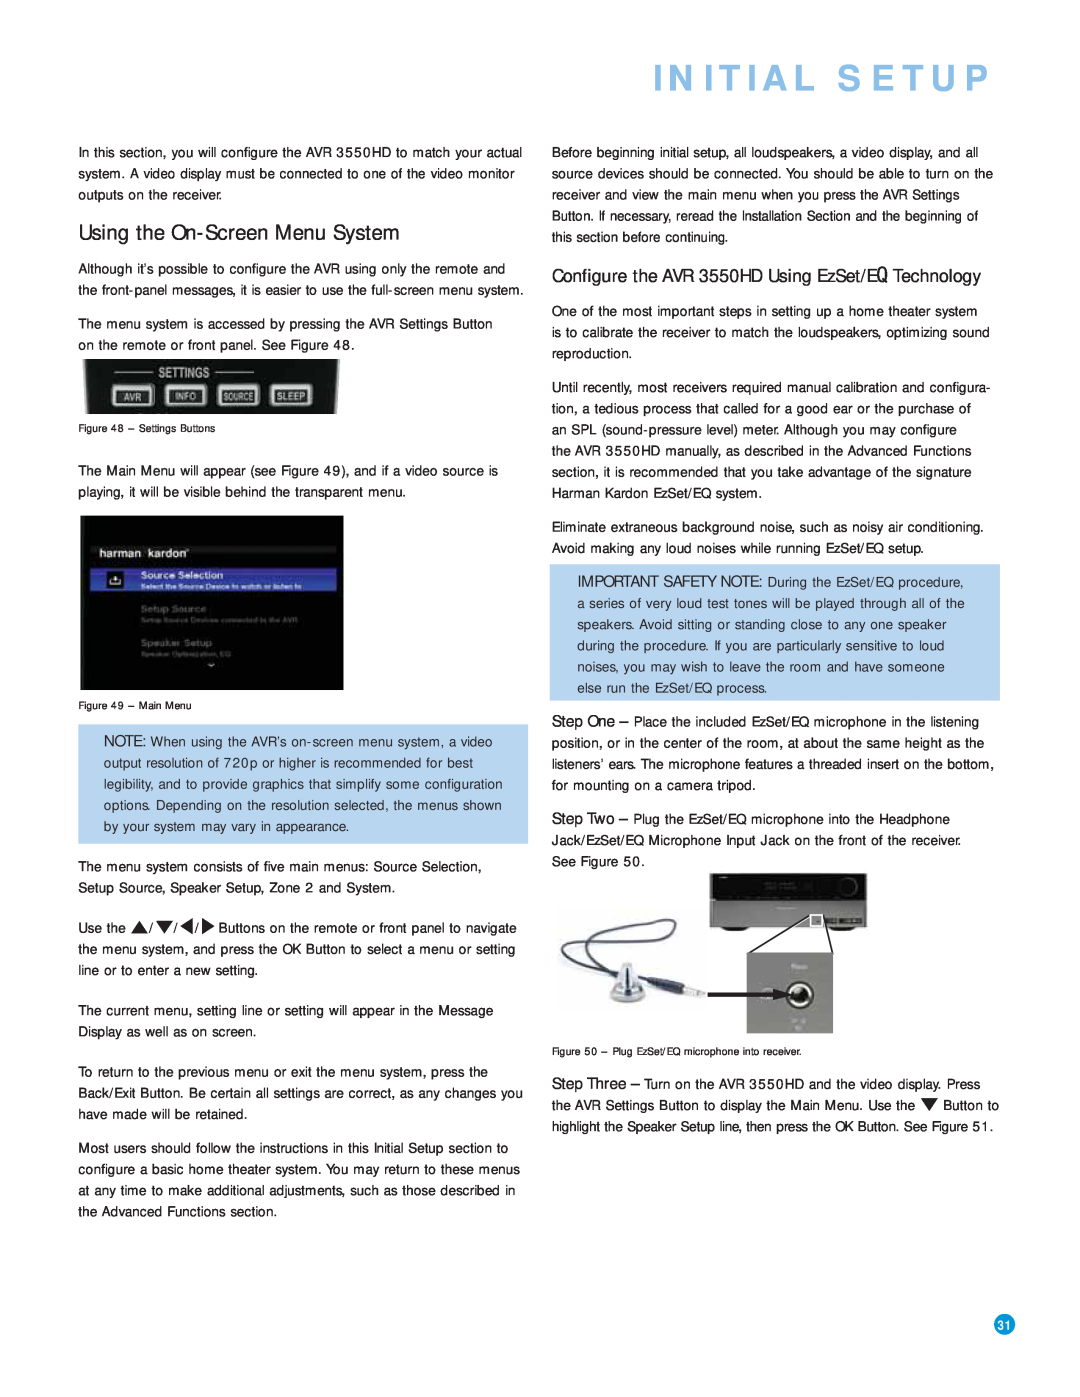 Harman-Kardon AVR 3550HD owner manual Initial Setup, Using the On-ScreenMenu System 